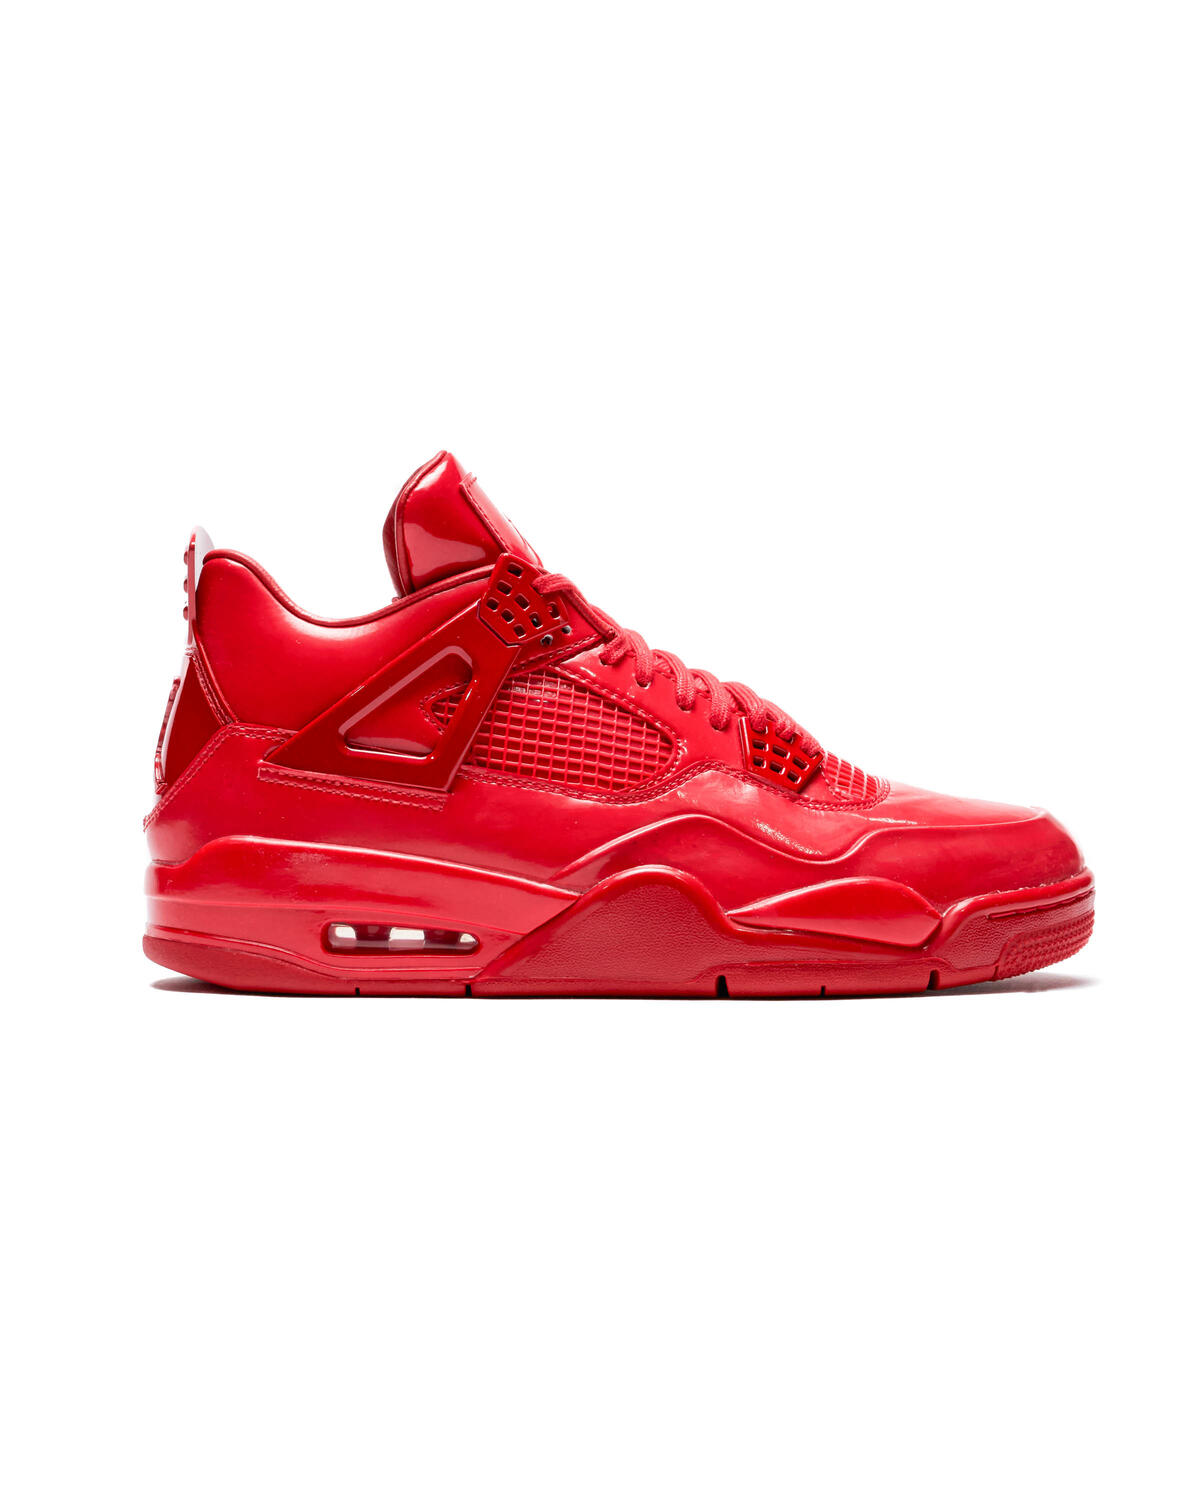 Air Jordan 11LAB4 Red Patent | 719864-600 | AFEW STORE